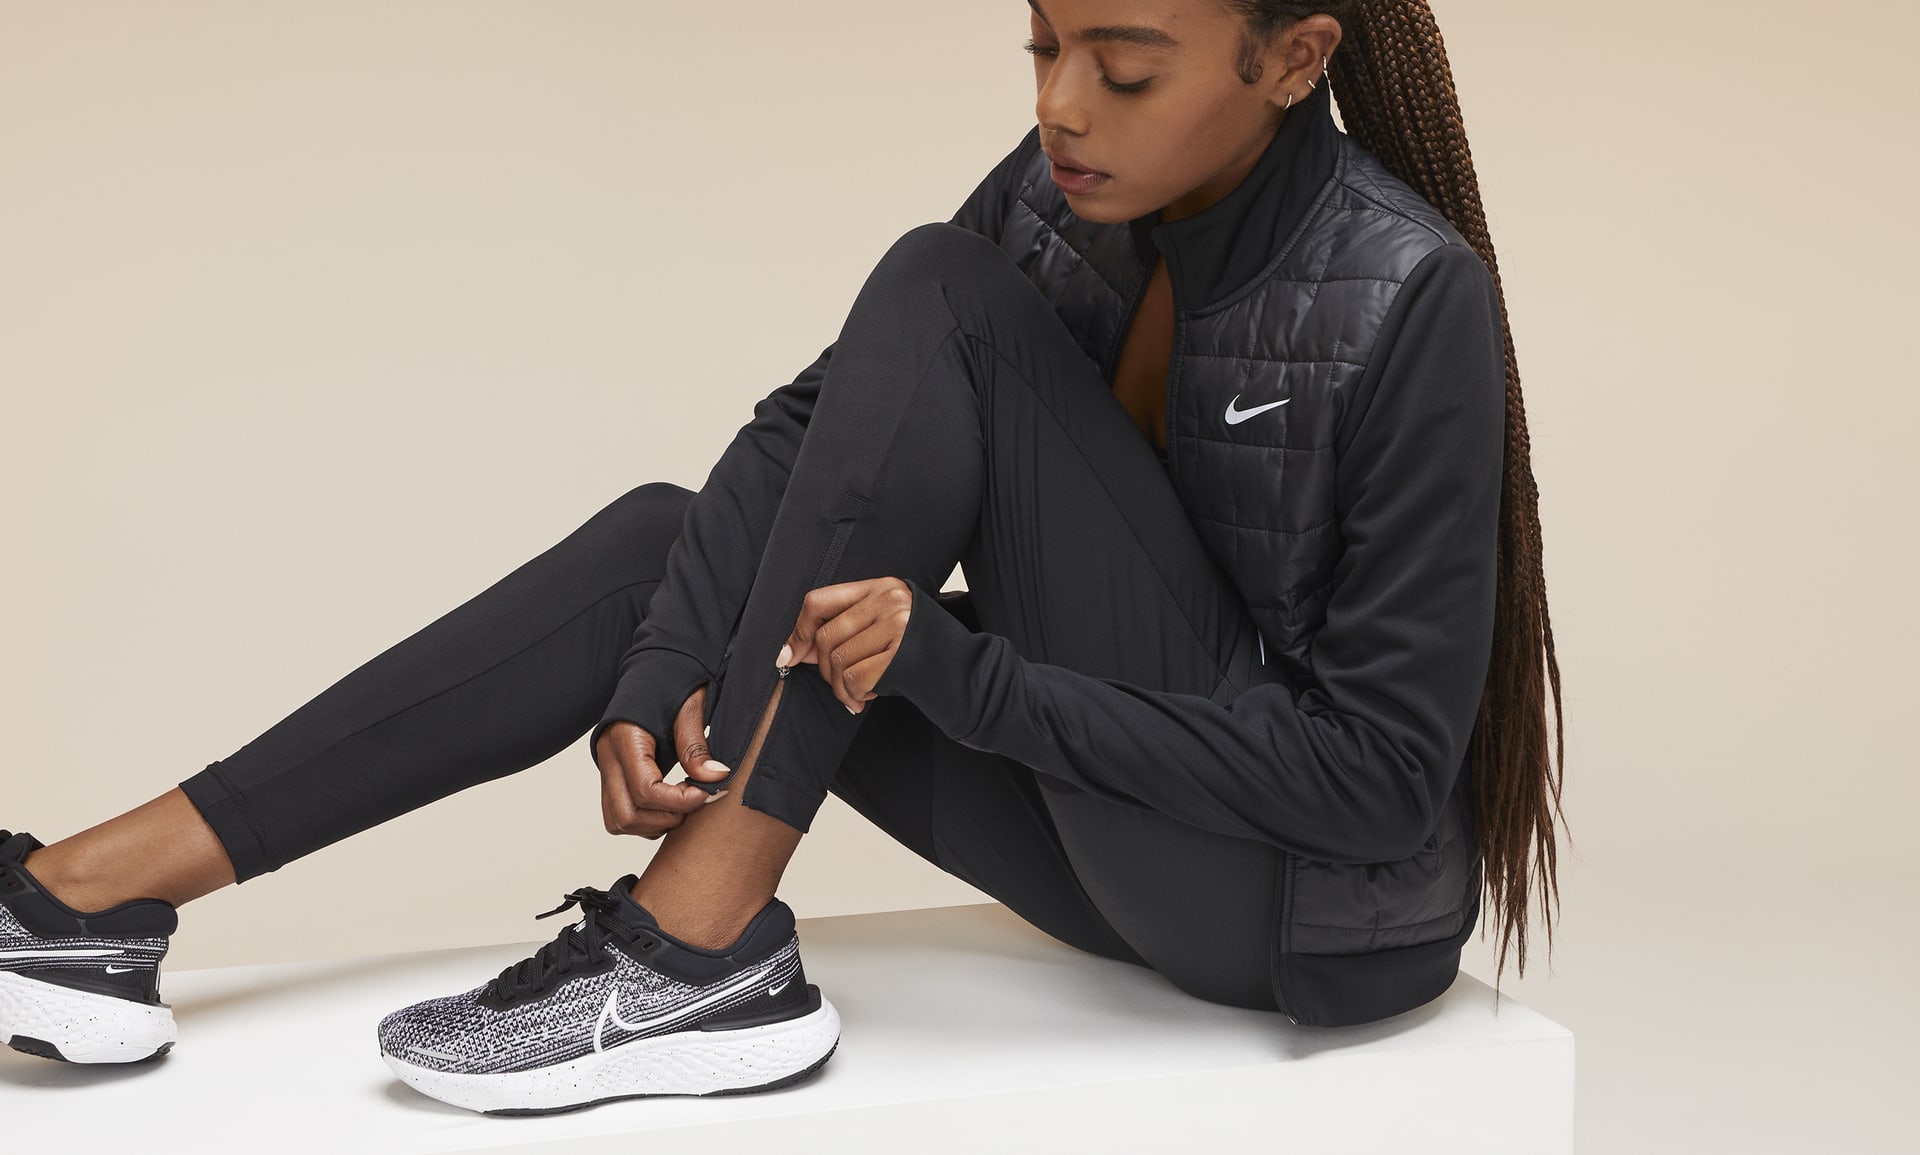 Nike Dri-FIT Essential Kadın Koşu Eşofman Altı DH6975-491